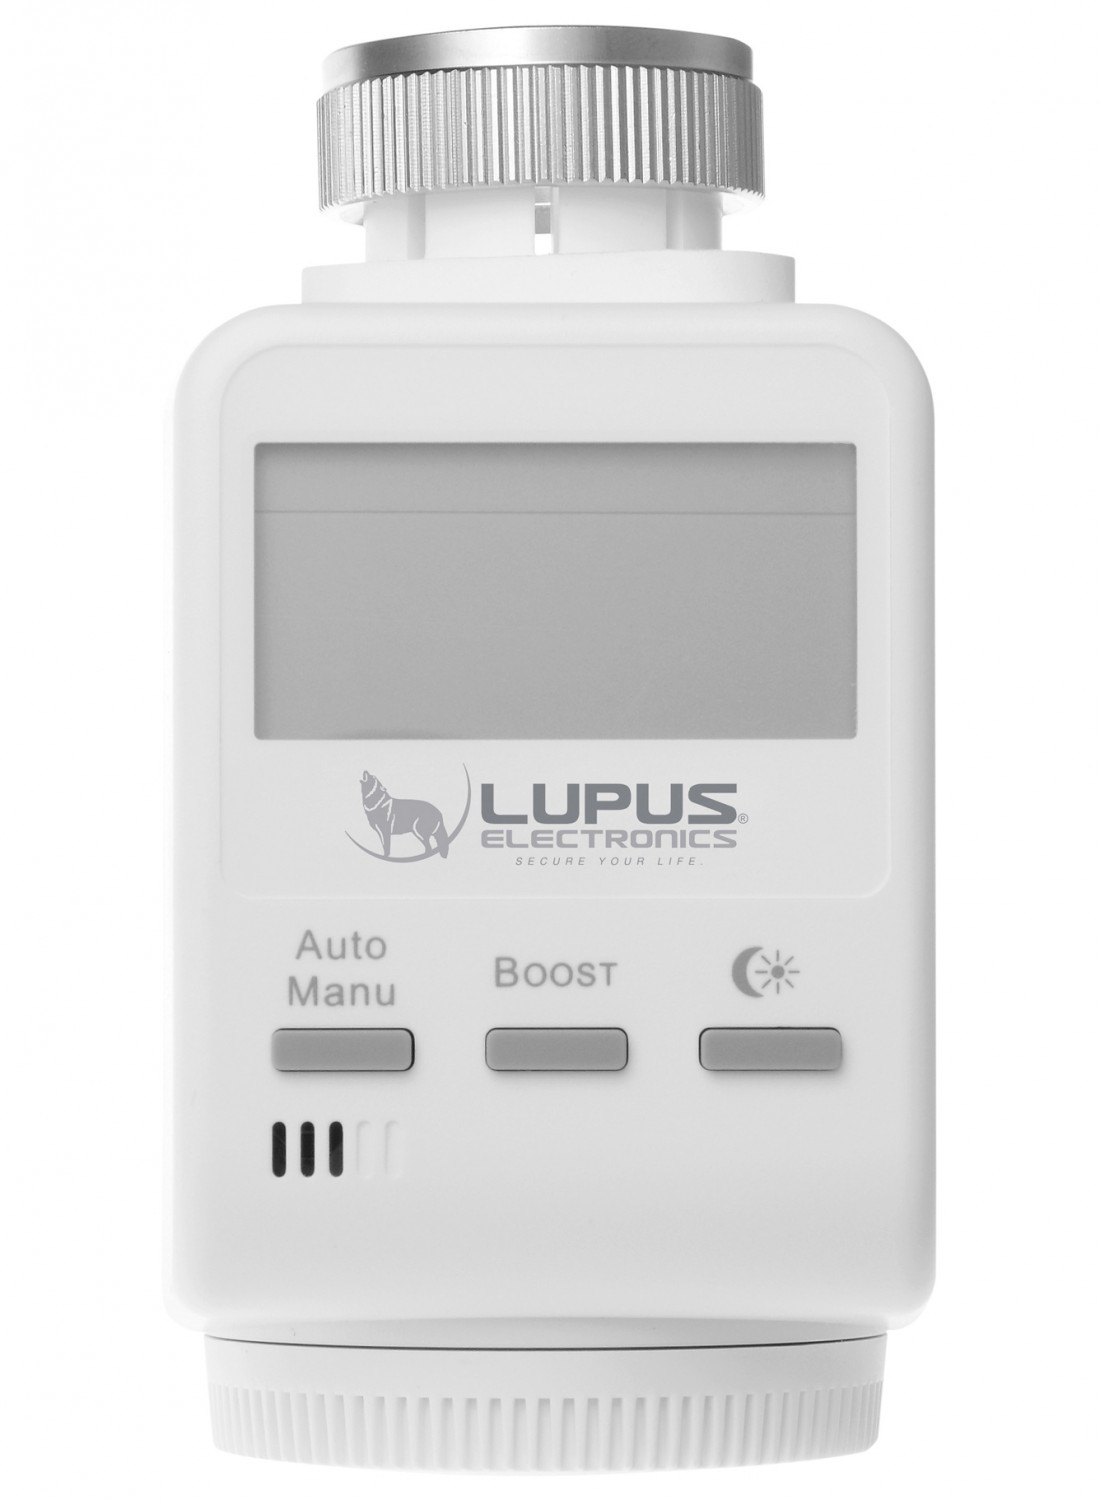 Komplettsysteme (Smart Home) Lupusec Smart-Home-System im Test, Bild 8